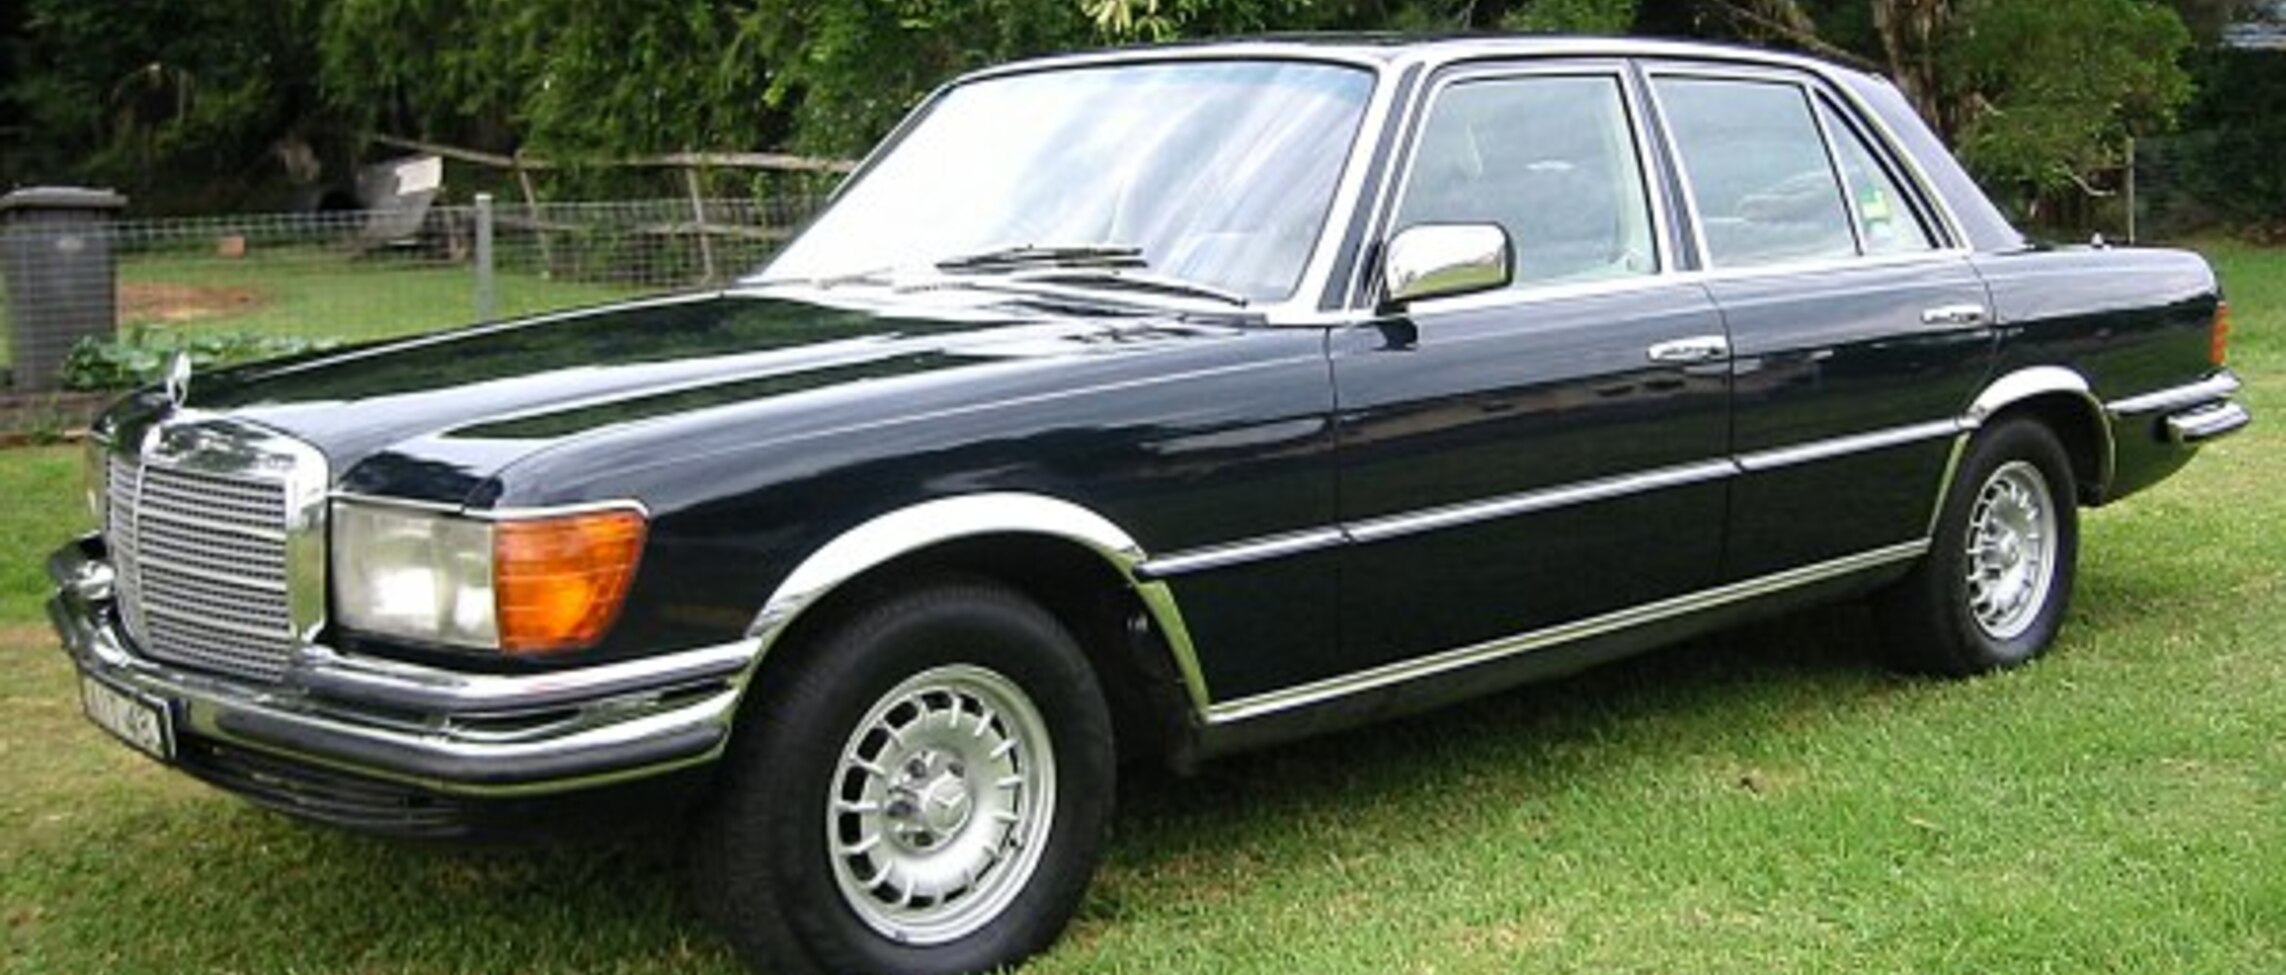 Mercedes-Benz S-class SE (W116) 350 SE V8 (205 Hp) 1978, 1979, 1980 